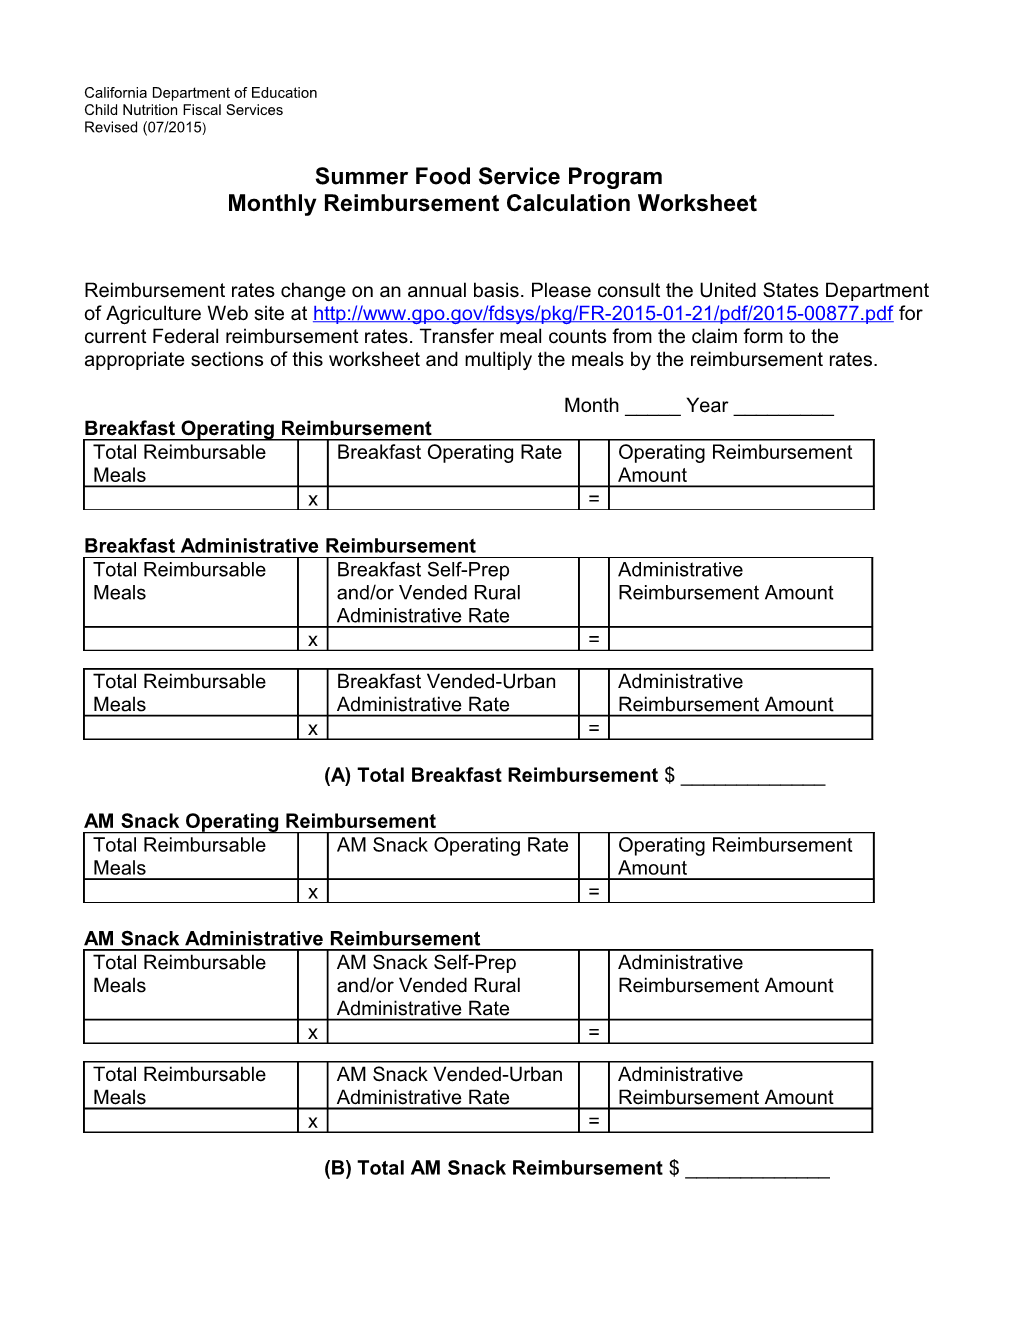 Monthly Reimbursement Calculation Worksheet - Nutrition Services (CA Dept of Education)